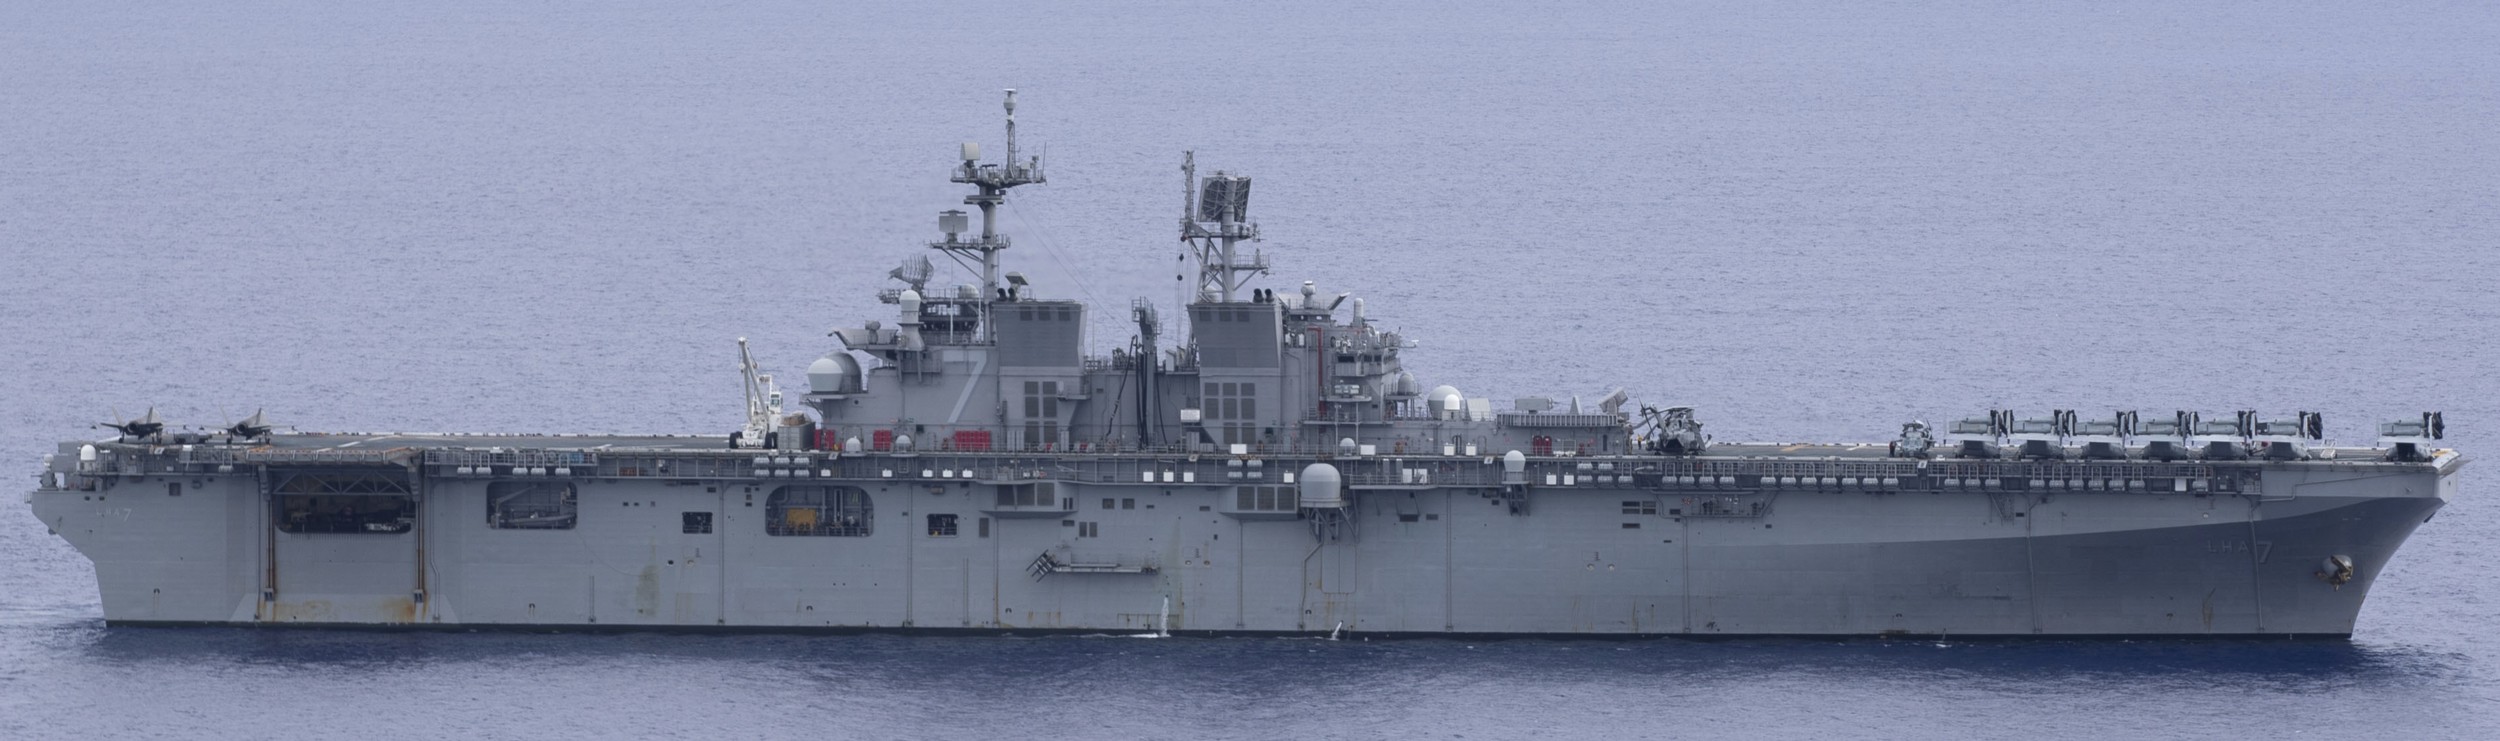 lha-7 uss tripoli america class amphibious assault ship landing us navy marines vmm-262 62